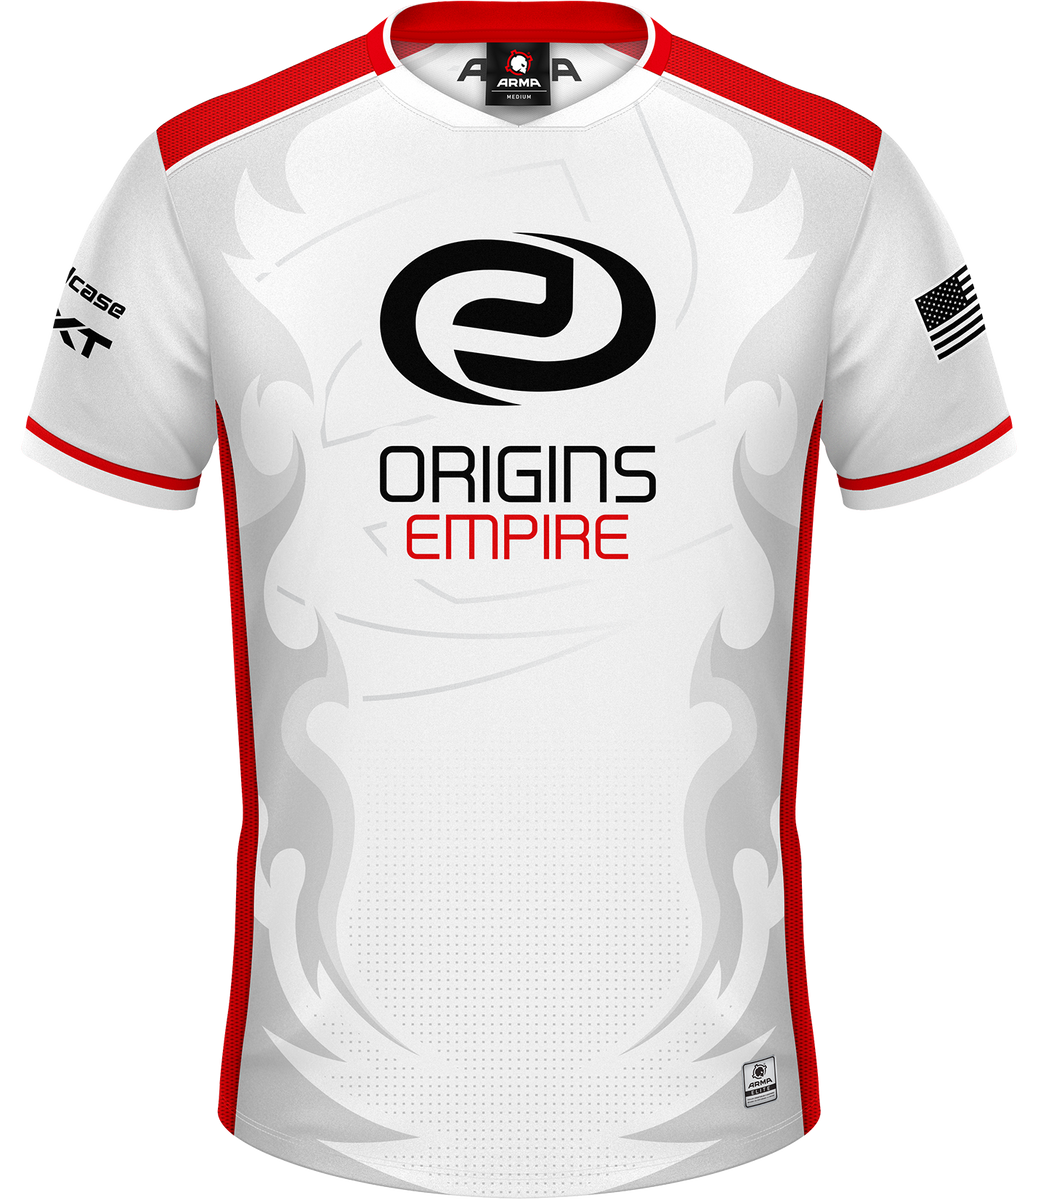 Origins Empire ELITE Jersey - White - Custom Esports Jersey by ARMA